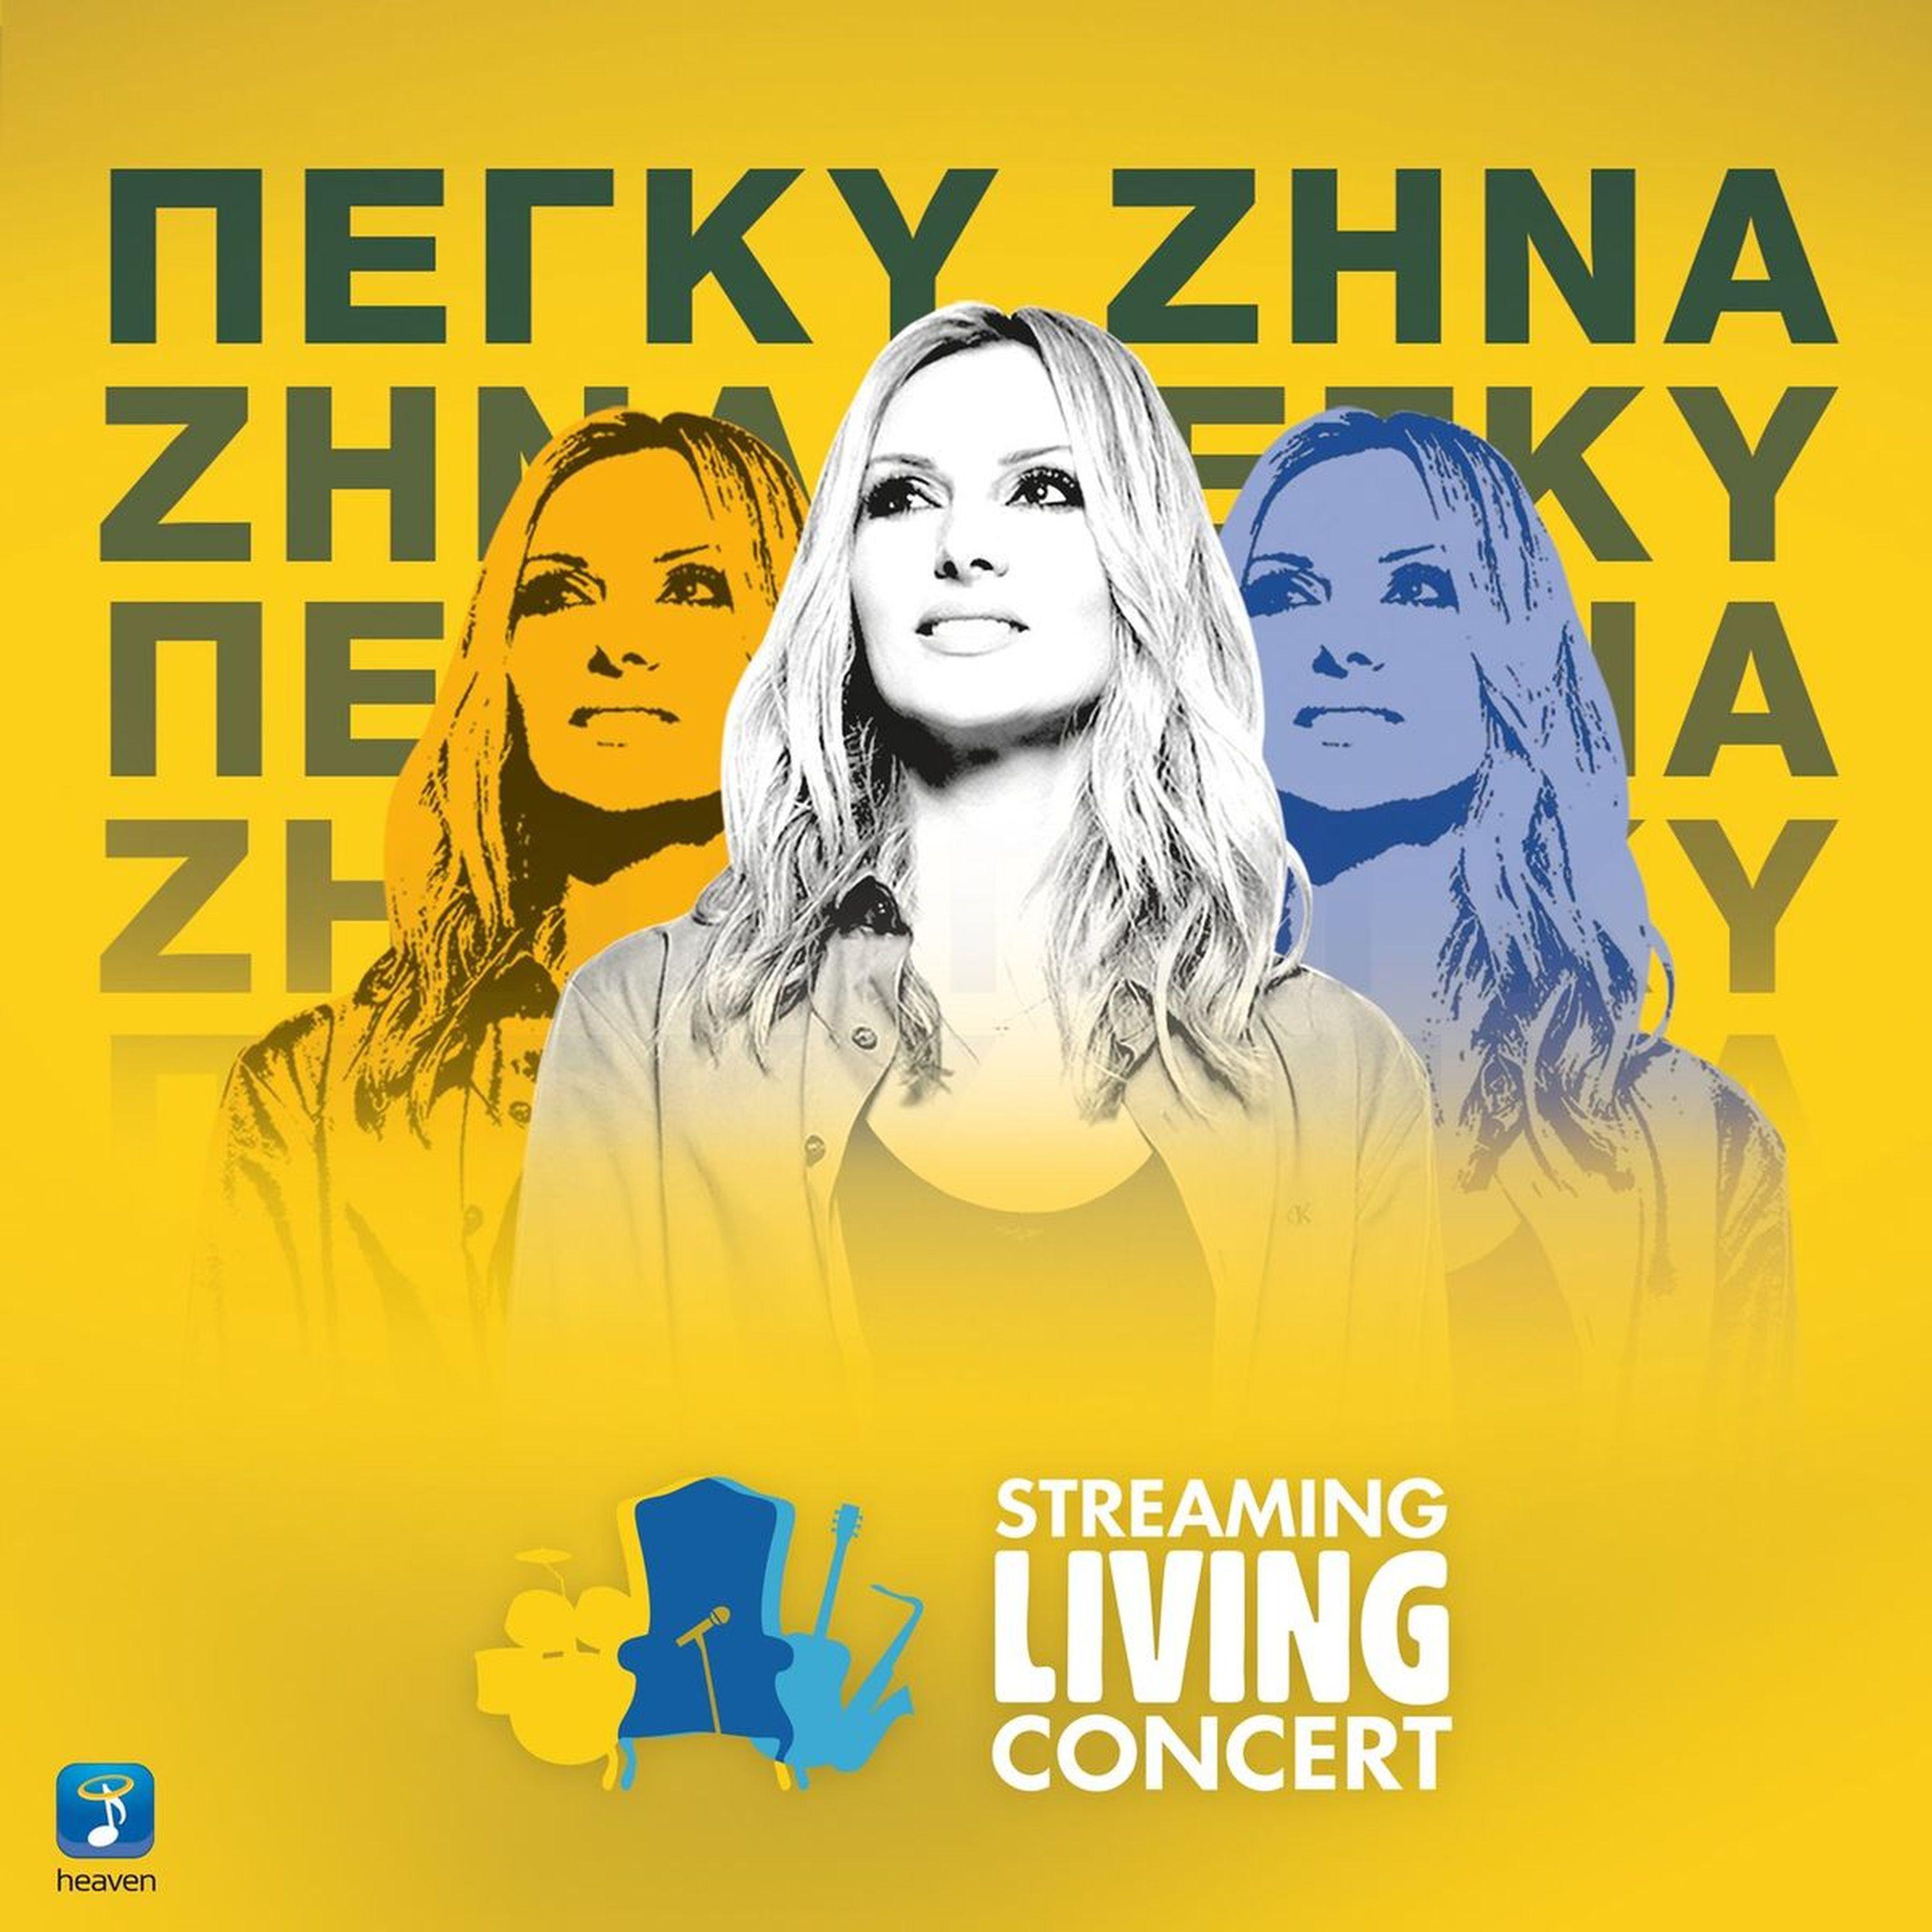 Peggy Zina - Mou Lipis (Streaming Living Concert)